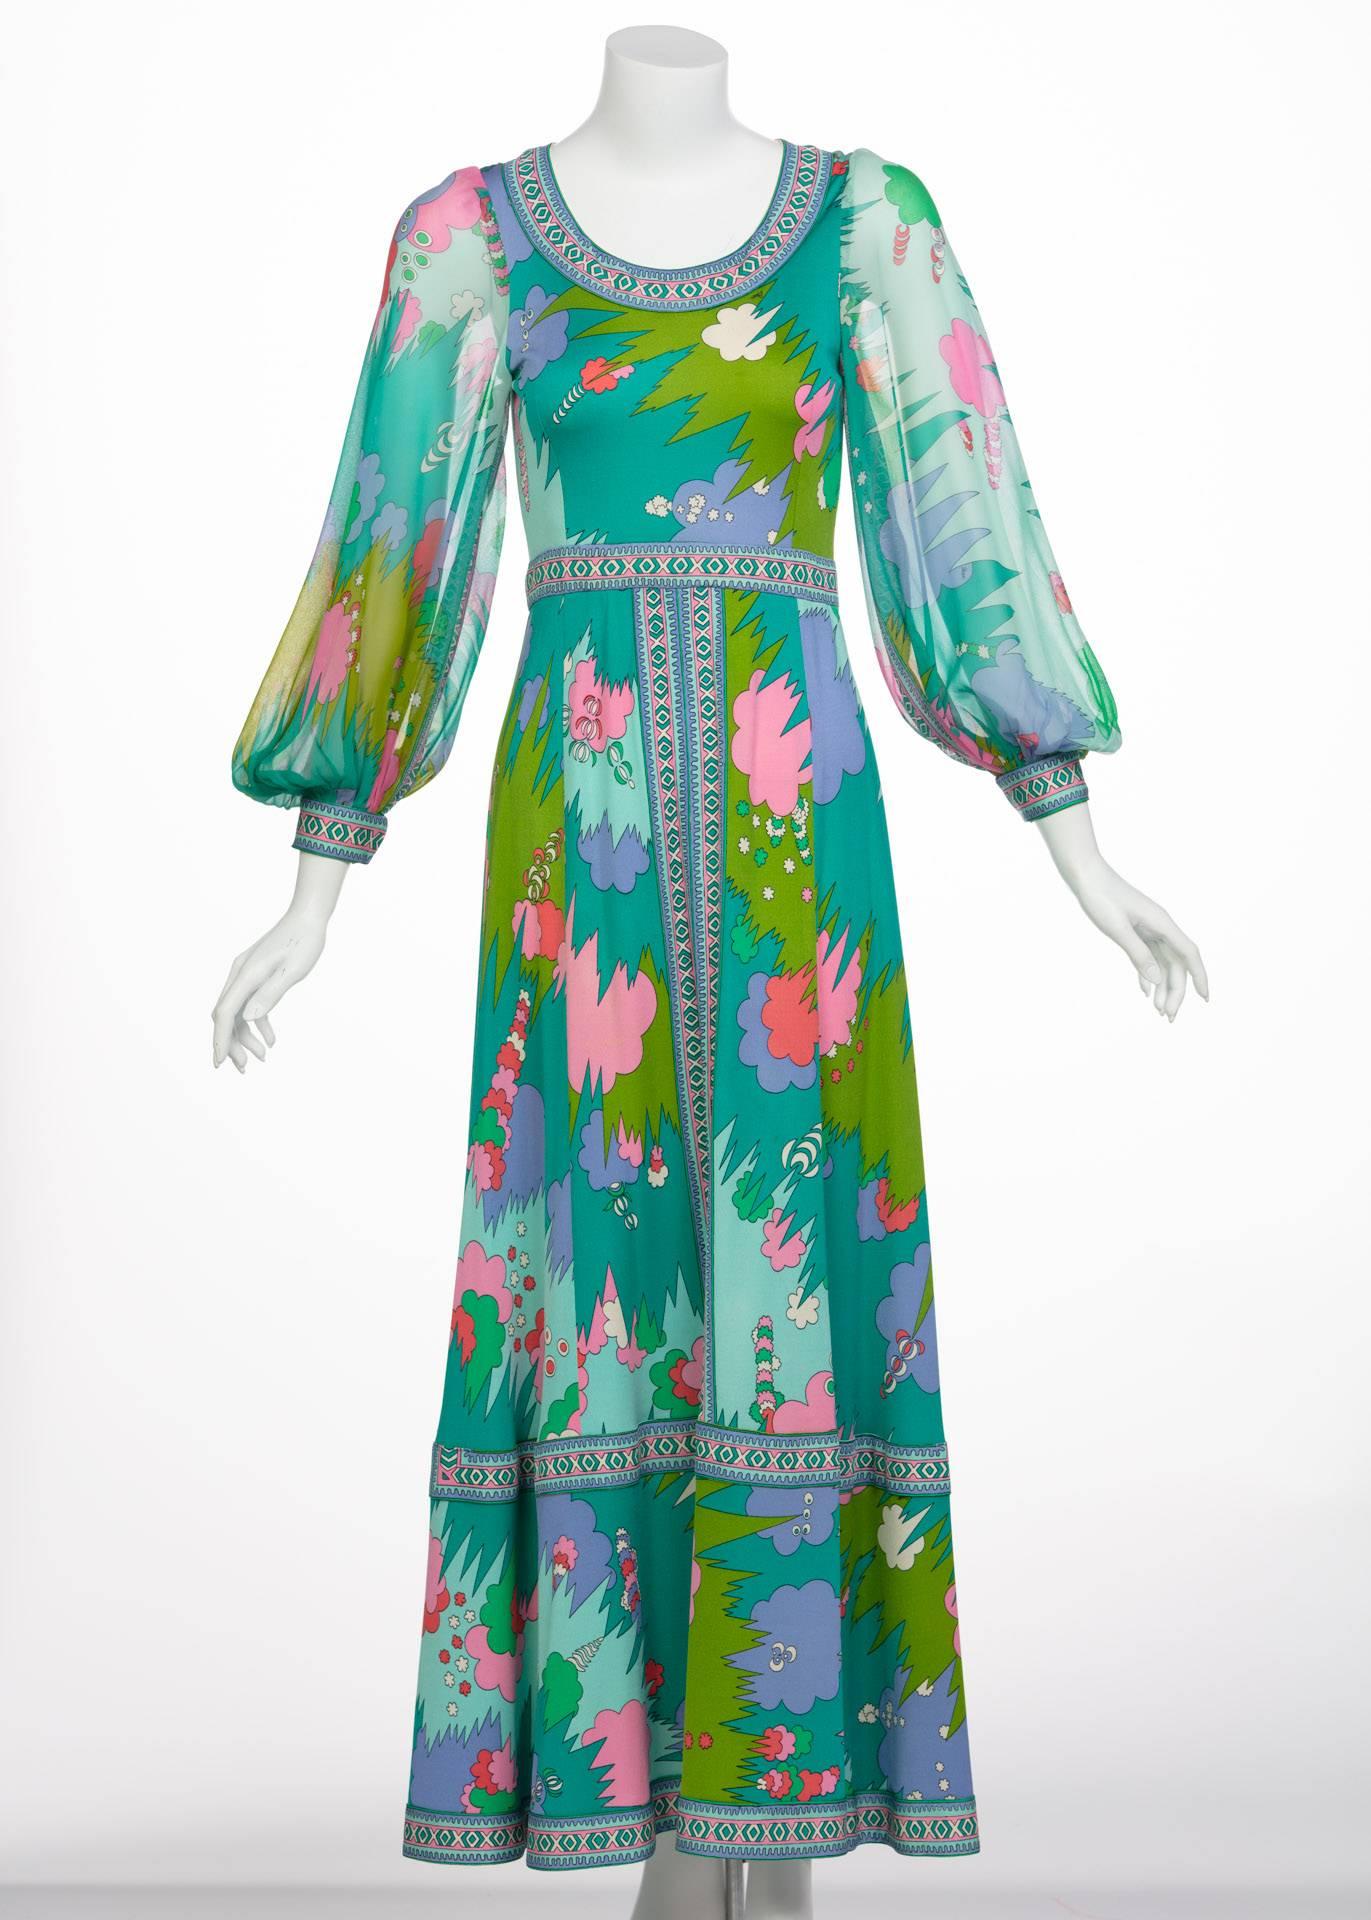 Bessi Multicolored Silk Jersey Chiffon Sleeves Maxi dress, 1970s  1